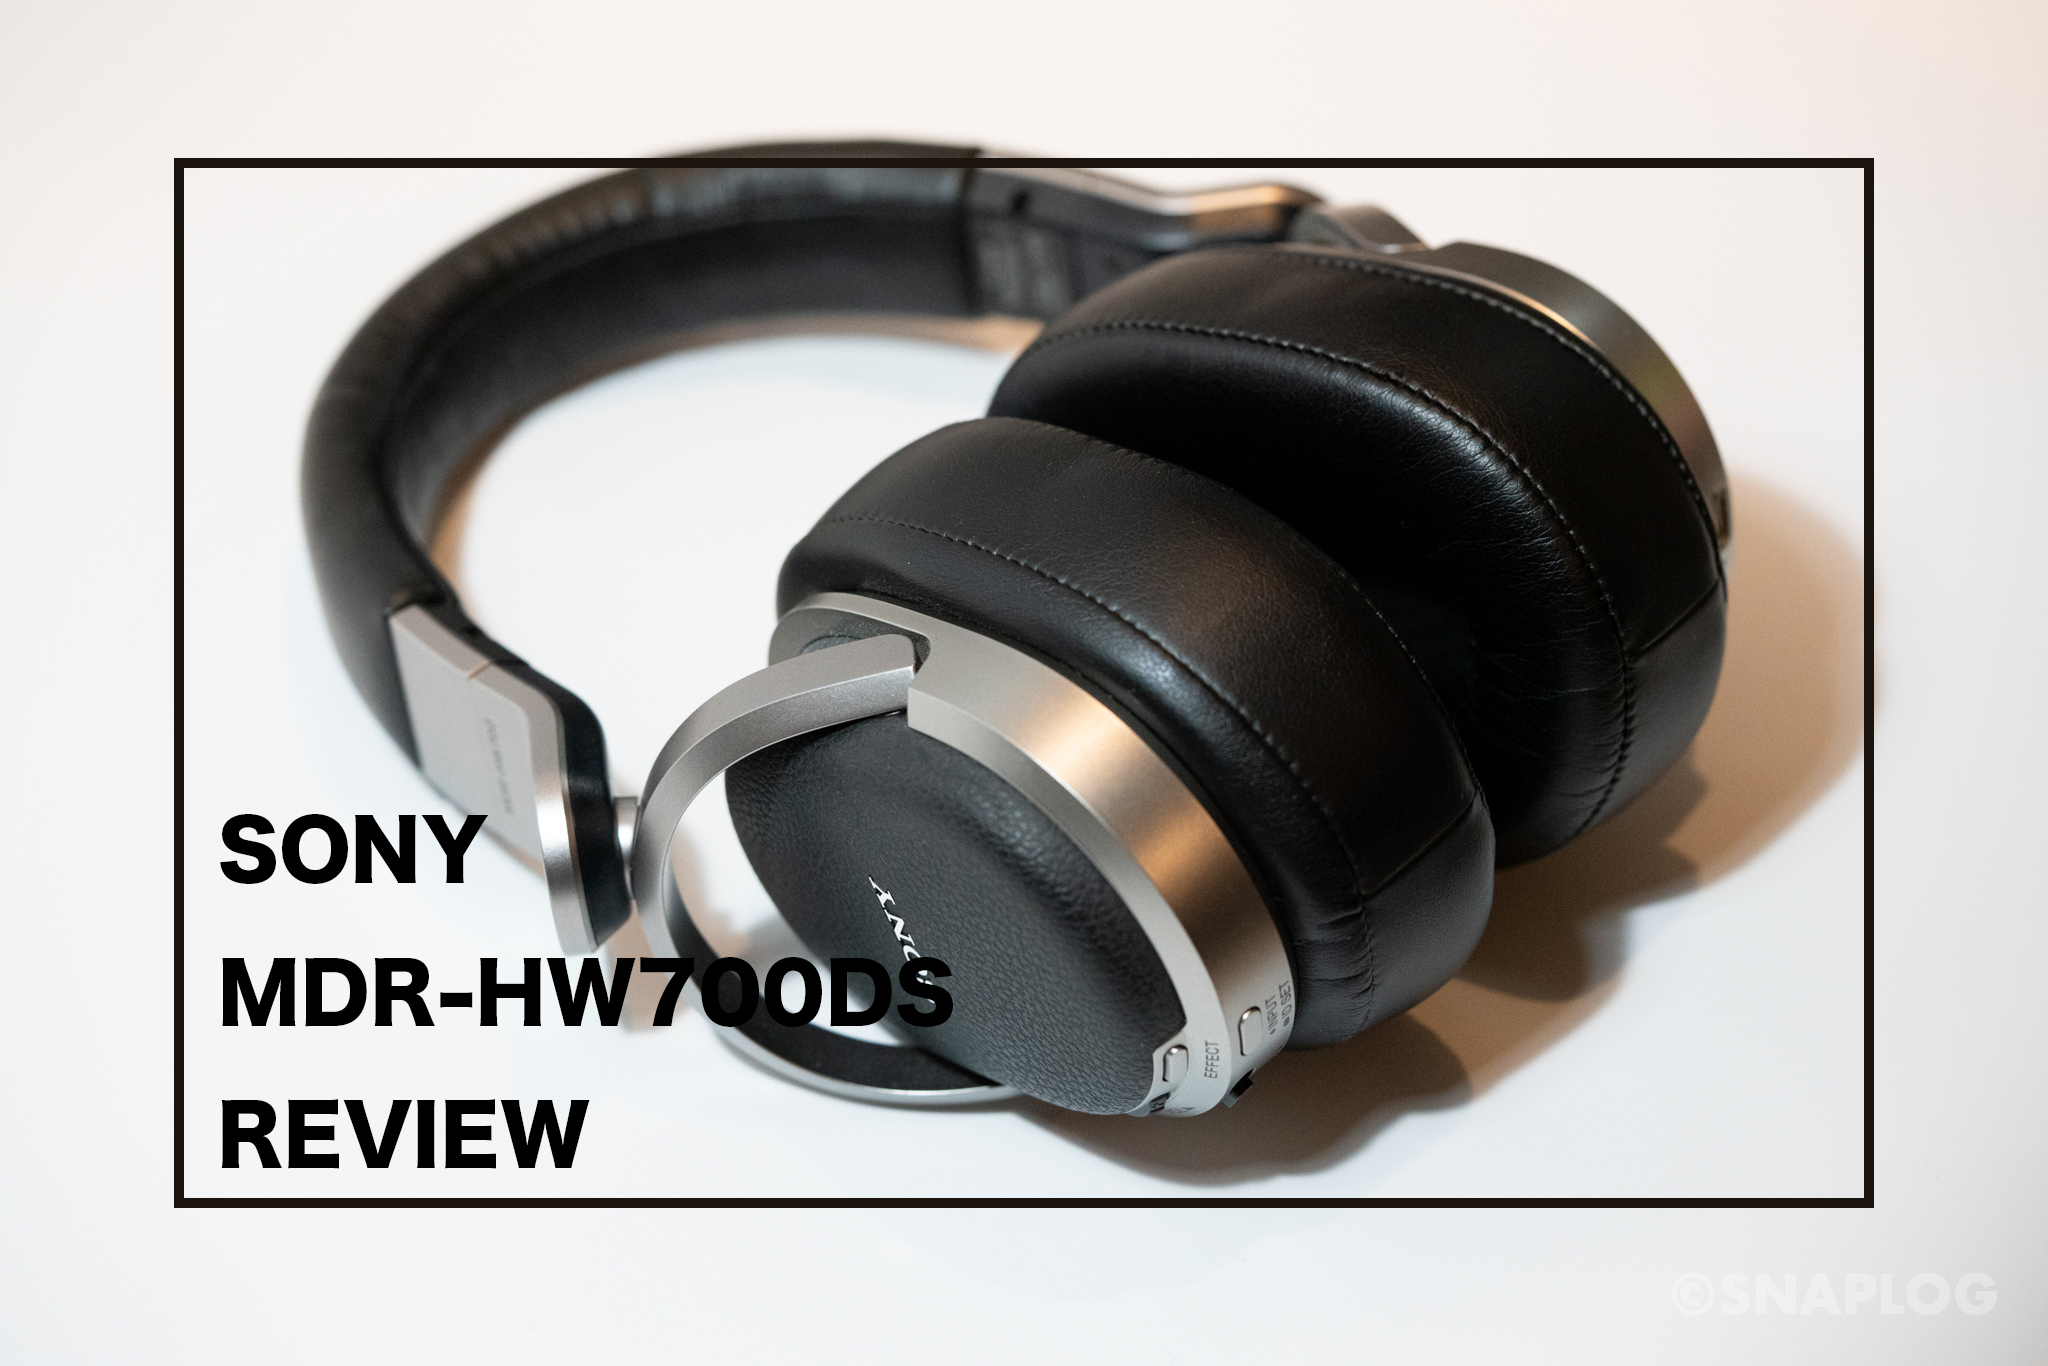 【SONY】MDR-HW700 9.1chデジタルサラウンドヘッドホン